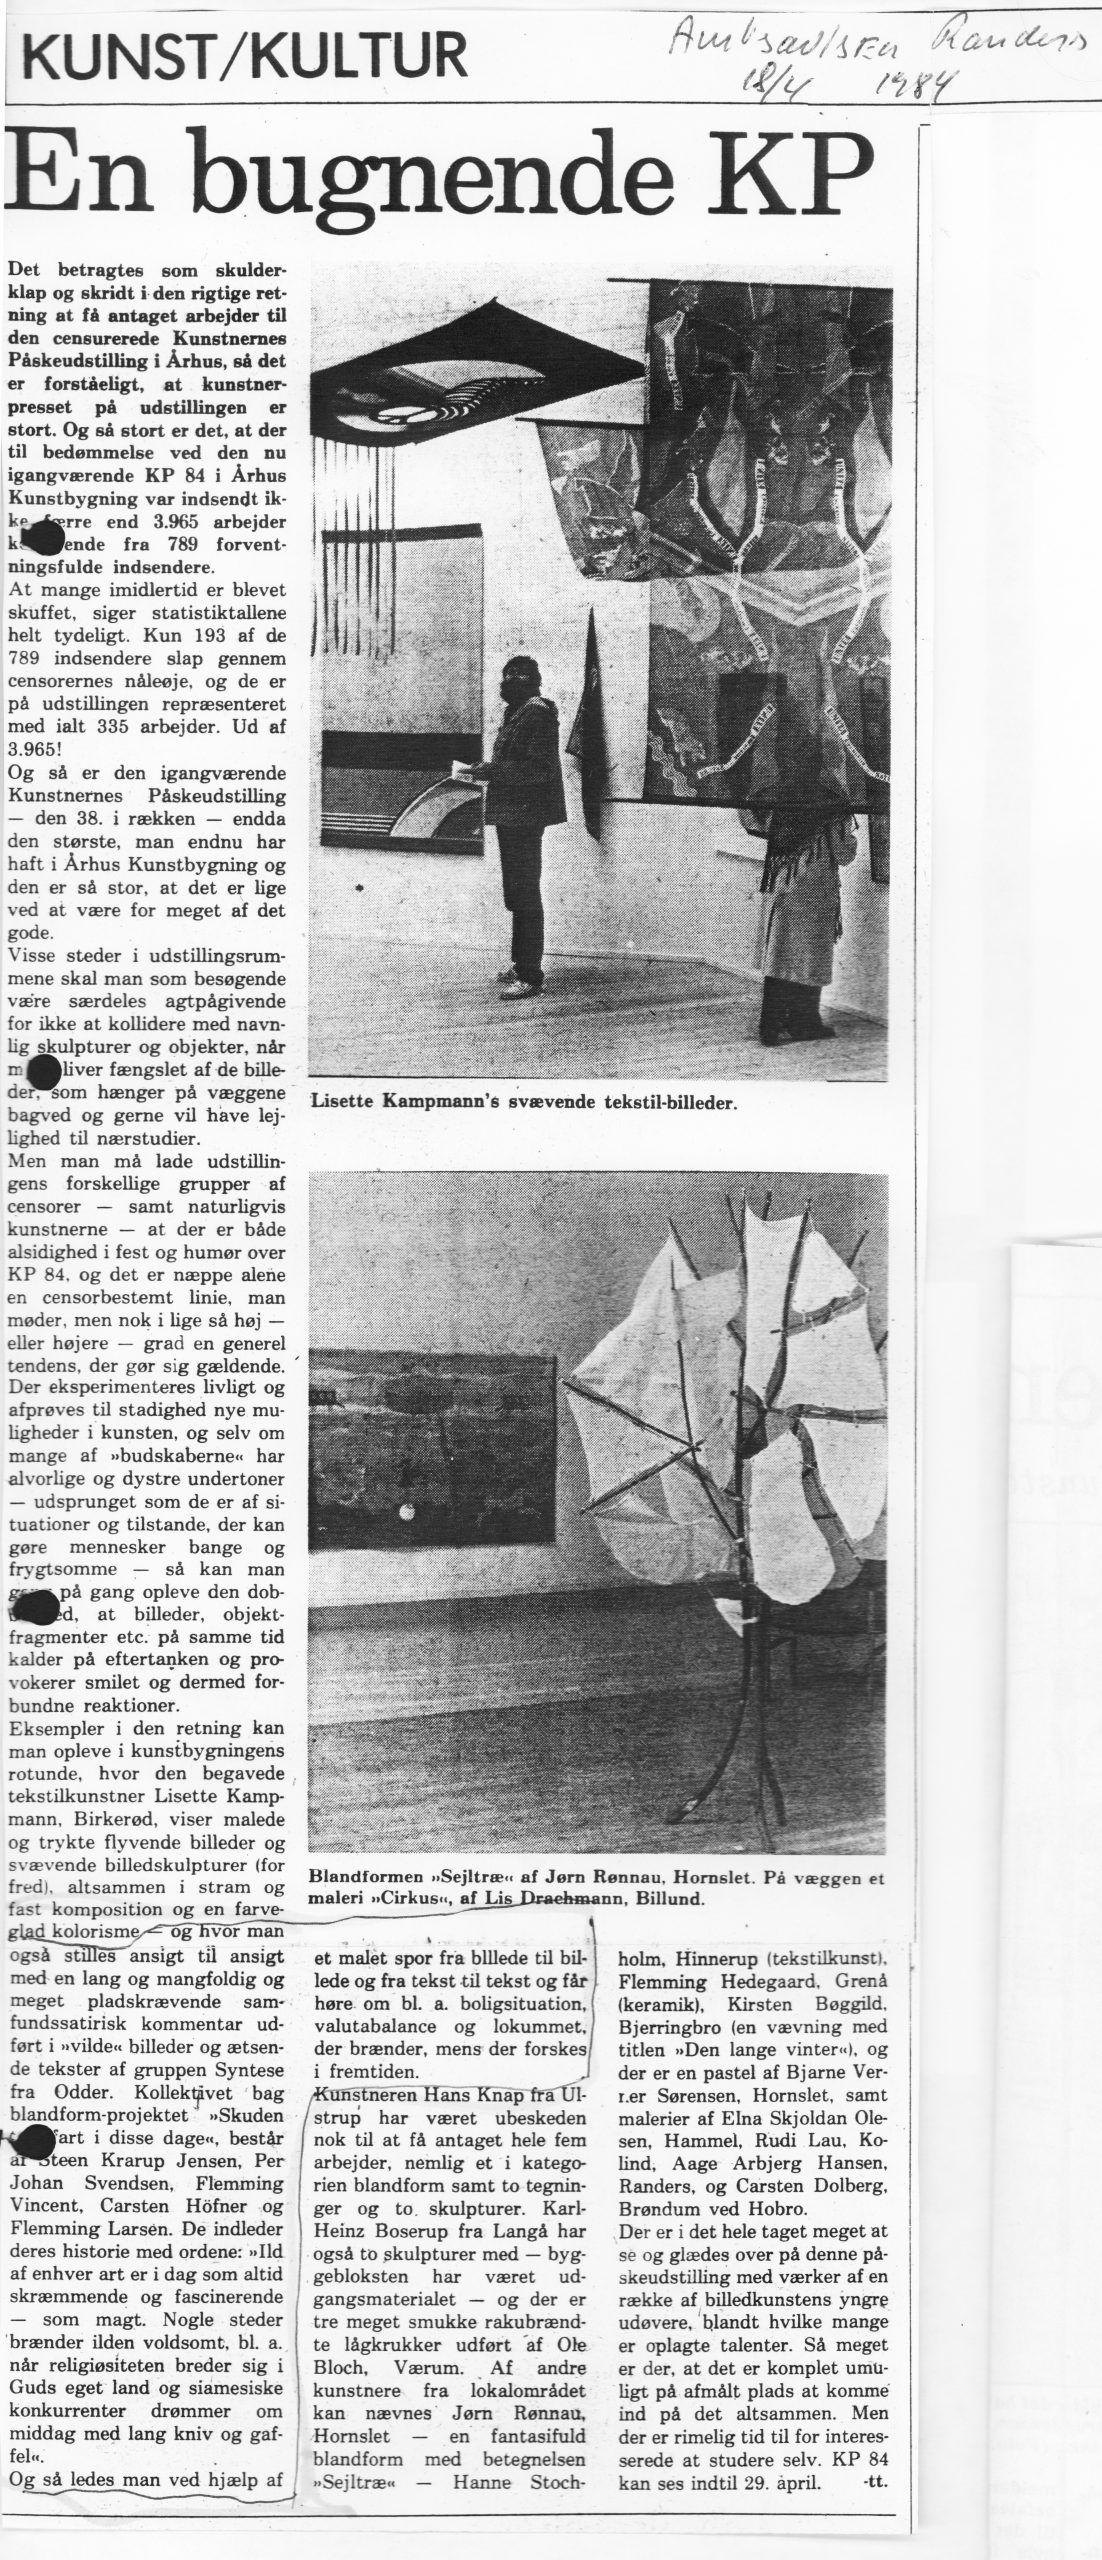 Bugnende KP. (Kunstnernes Påskeudstilling 1984. Kunstbygningen, Aarhus). -tt. Amtsavisen Randers.